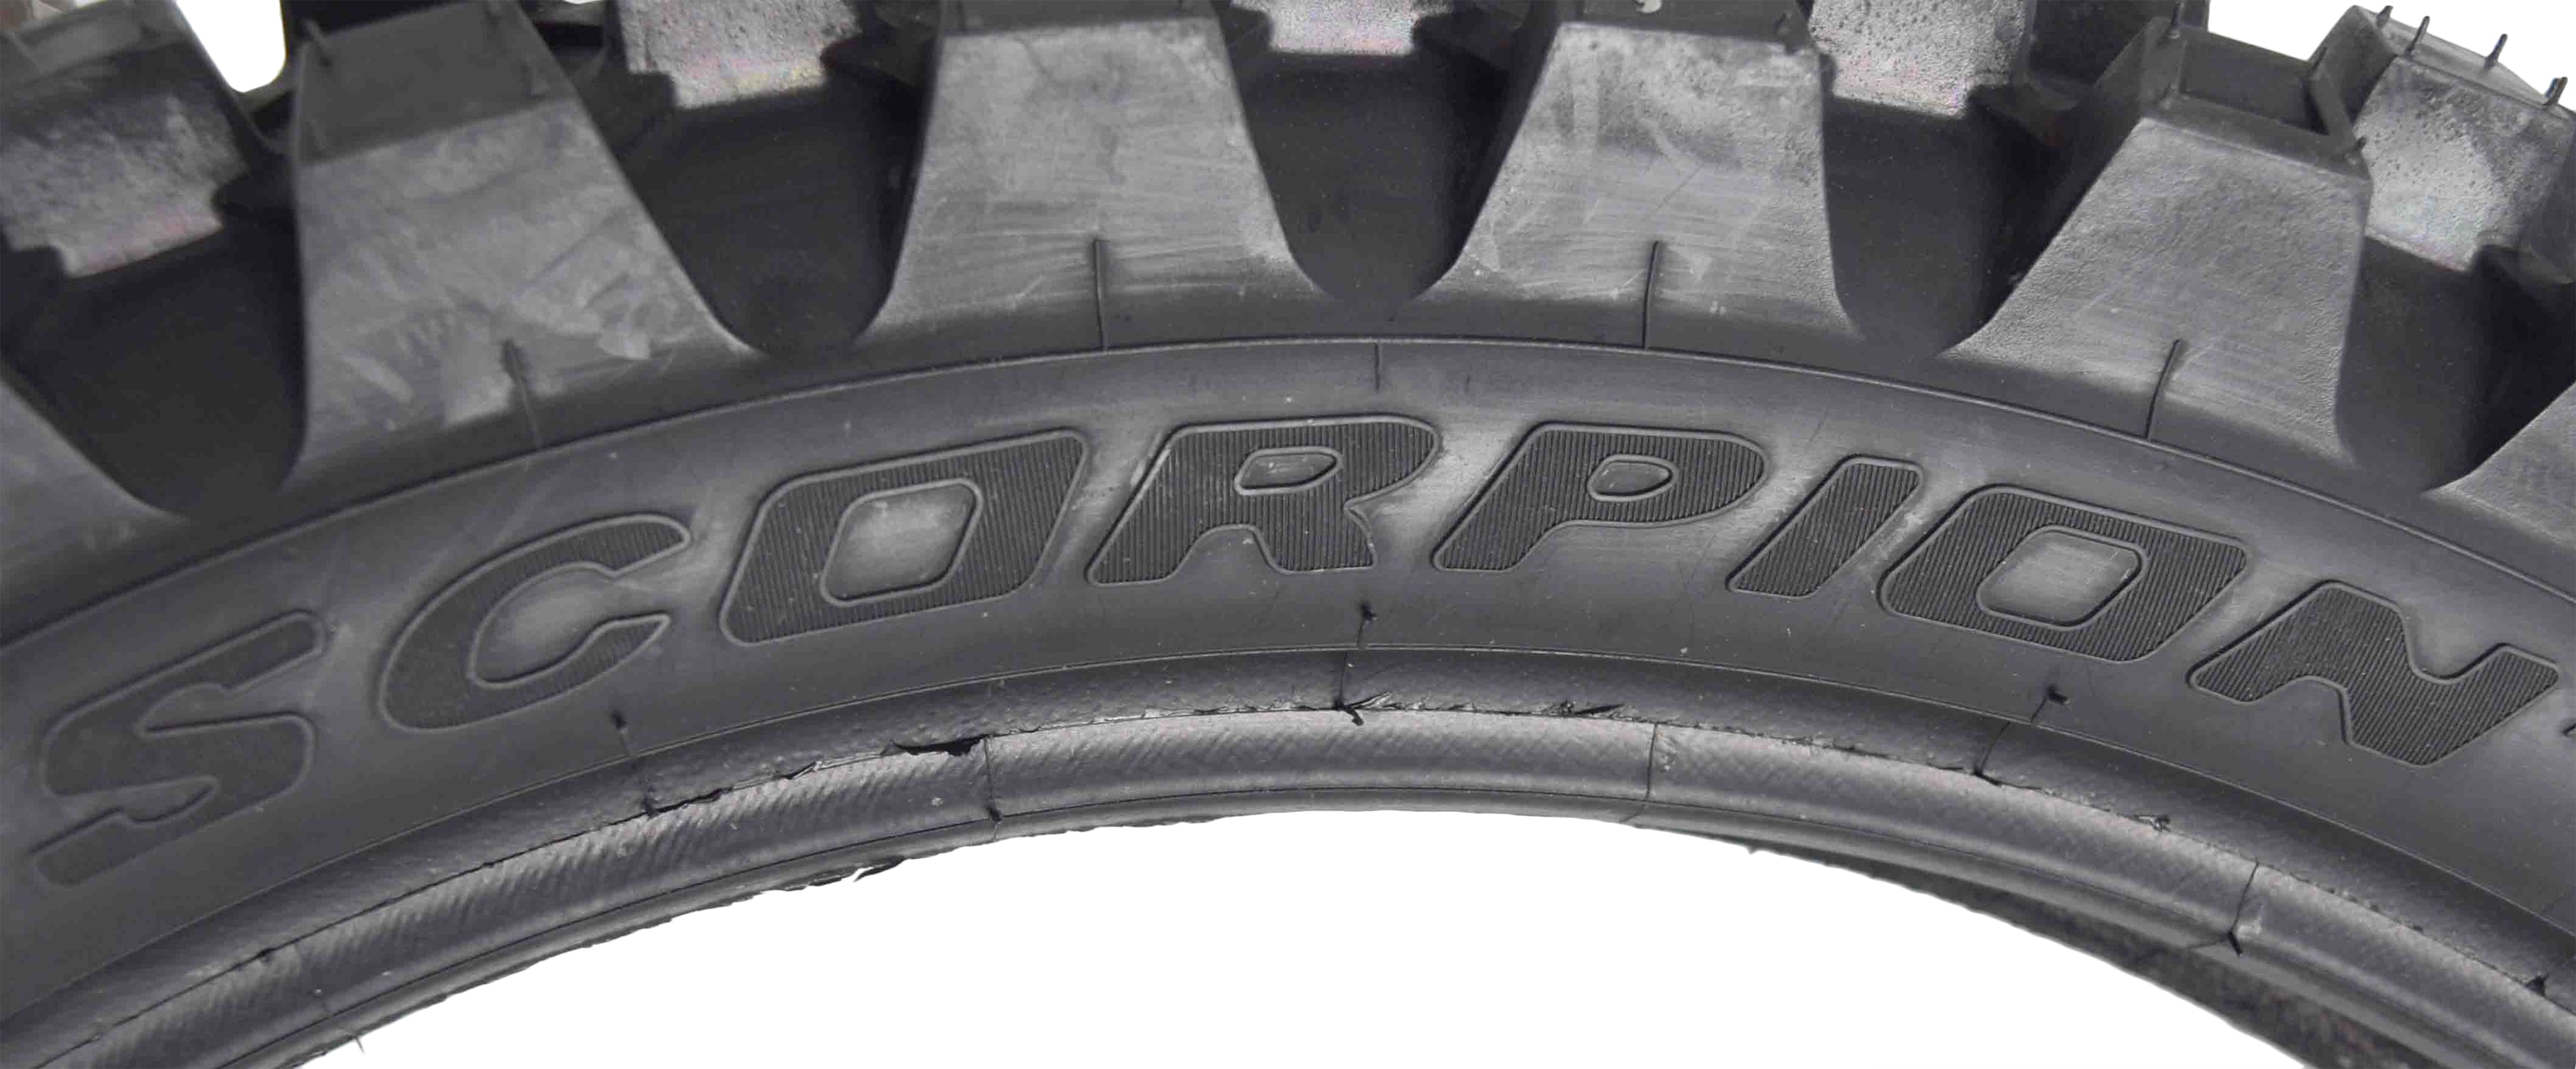 Pirelli Scprn Mx-x 80/100-21 A/t Frt Tires Pn:2133700  